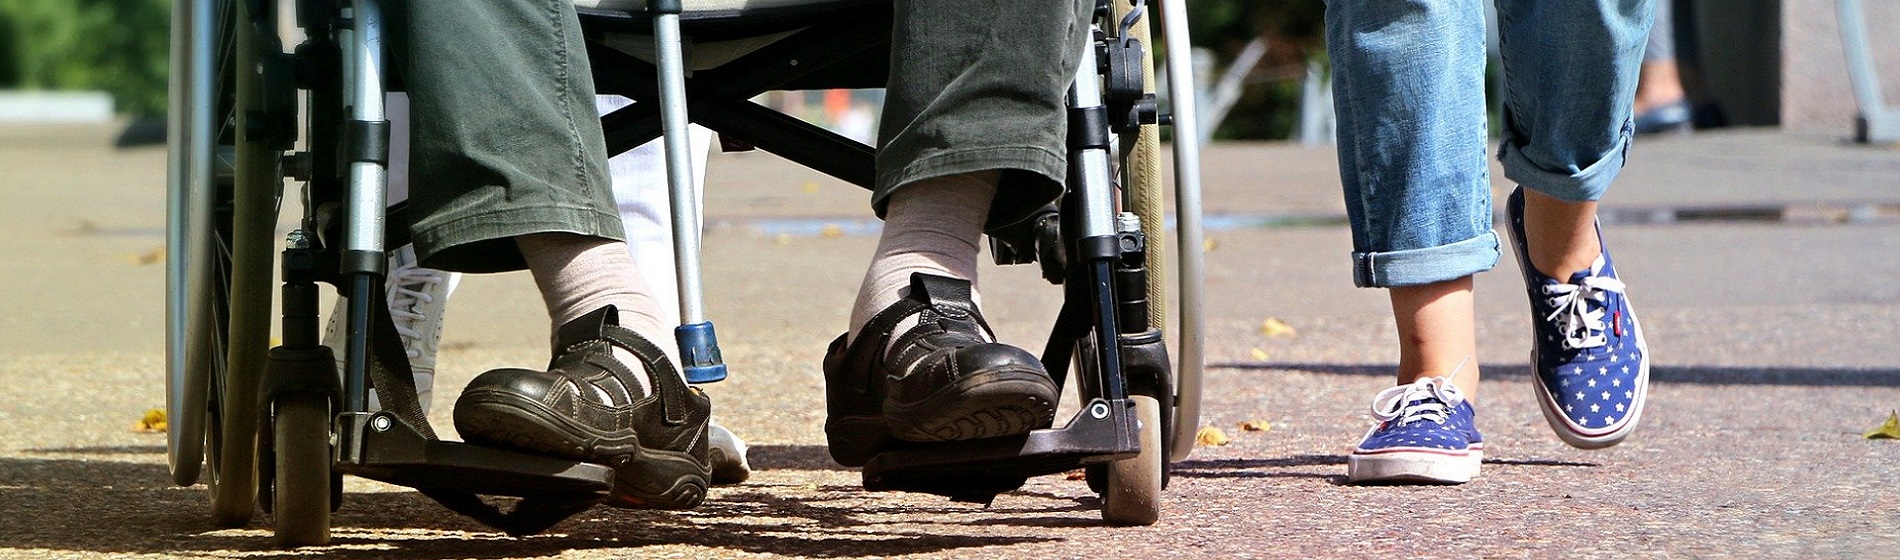 senior in wheelchair beside walking person